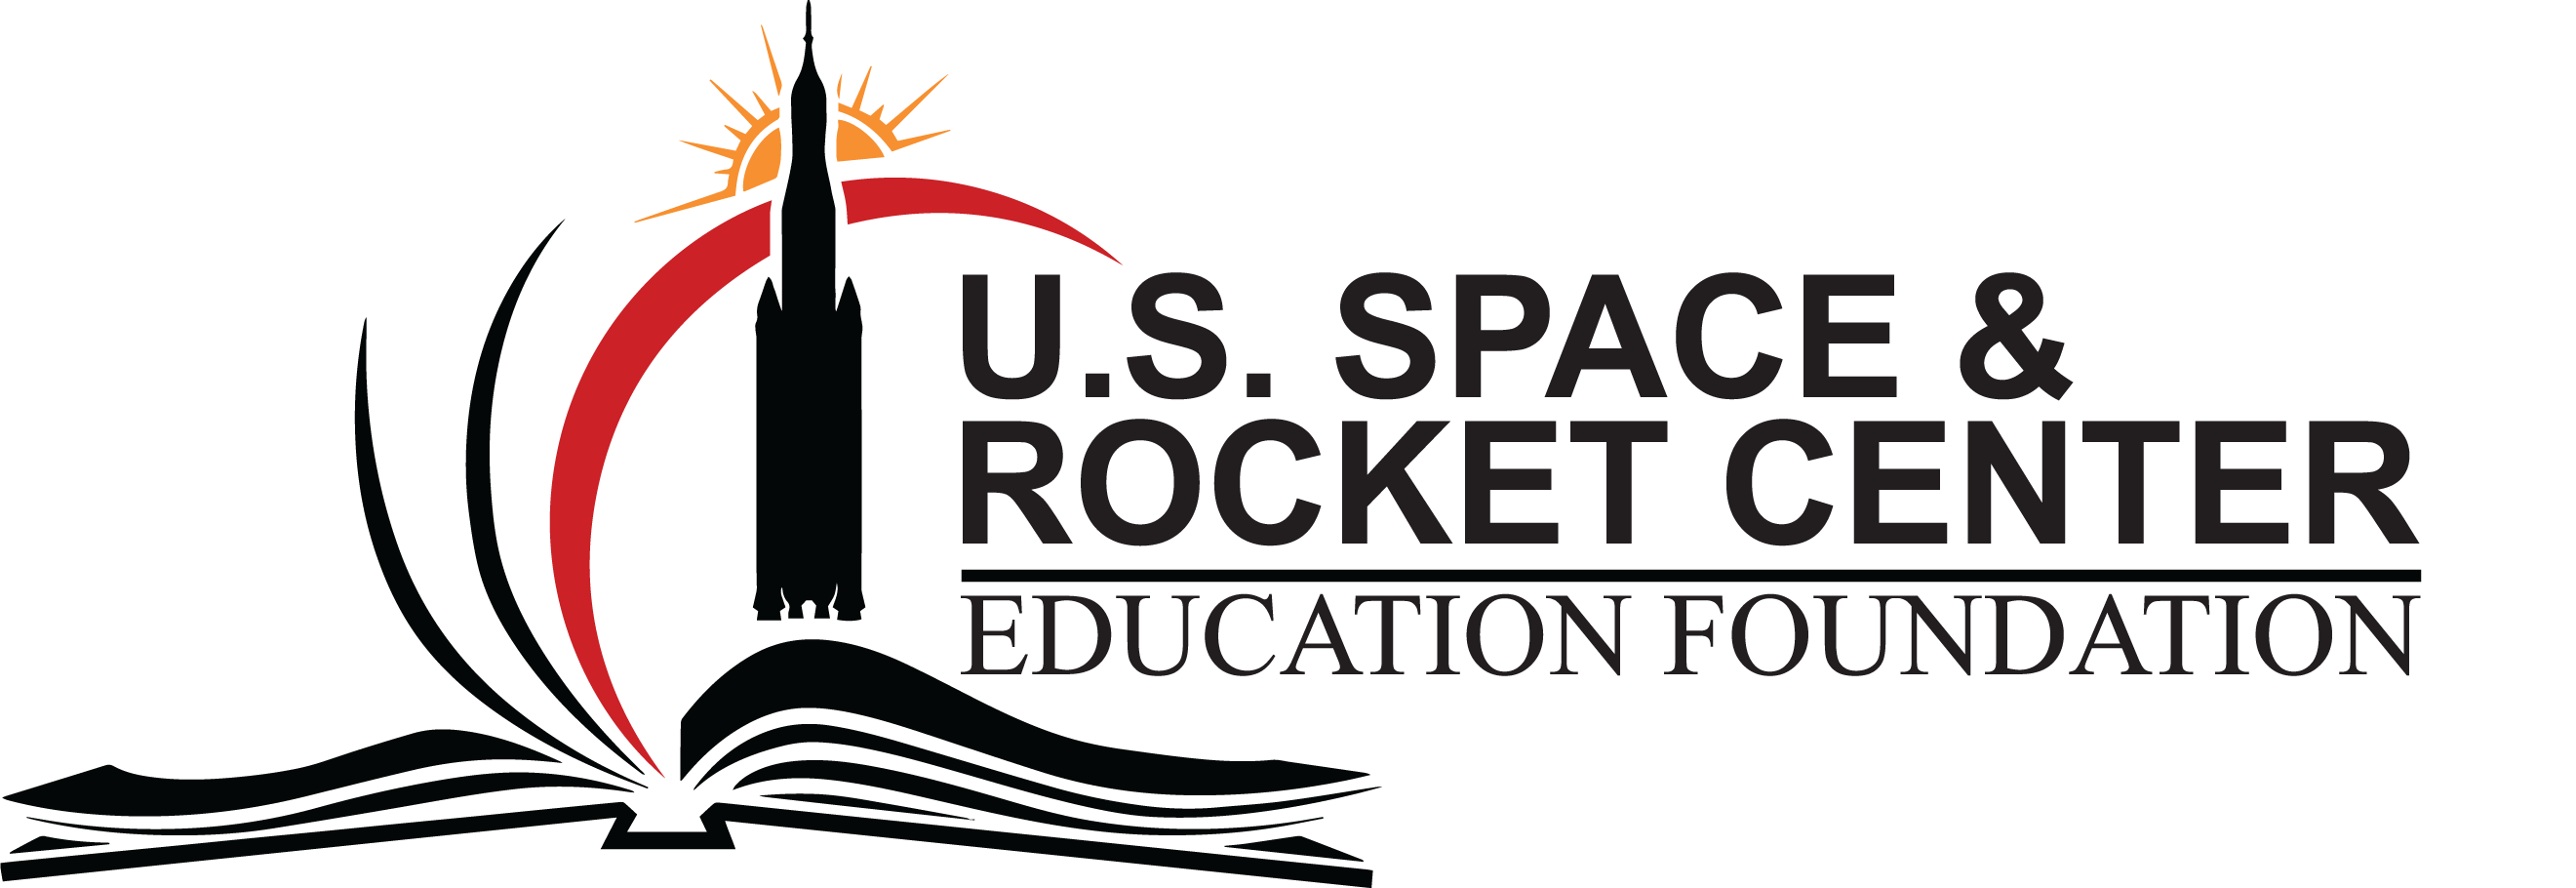 U.S. Space & Rocket Center Education Foundation